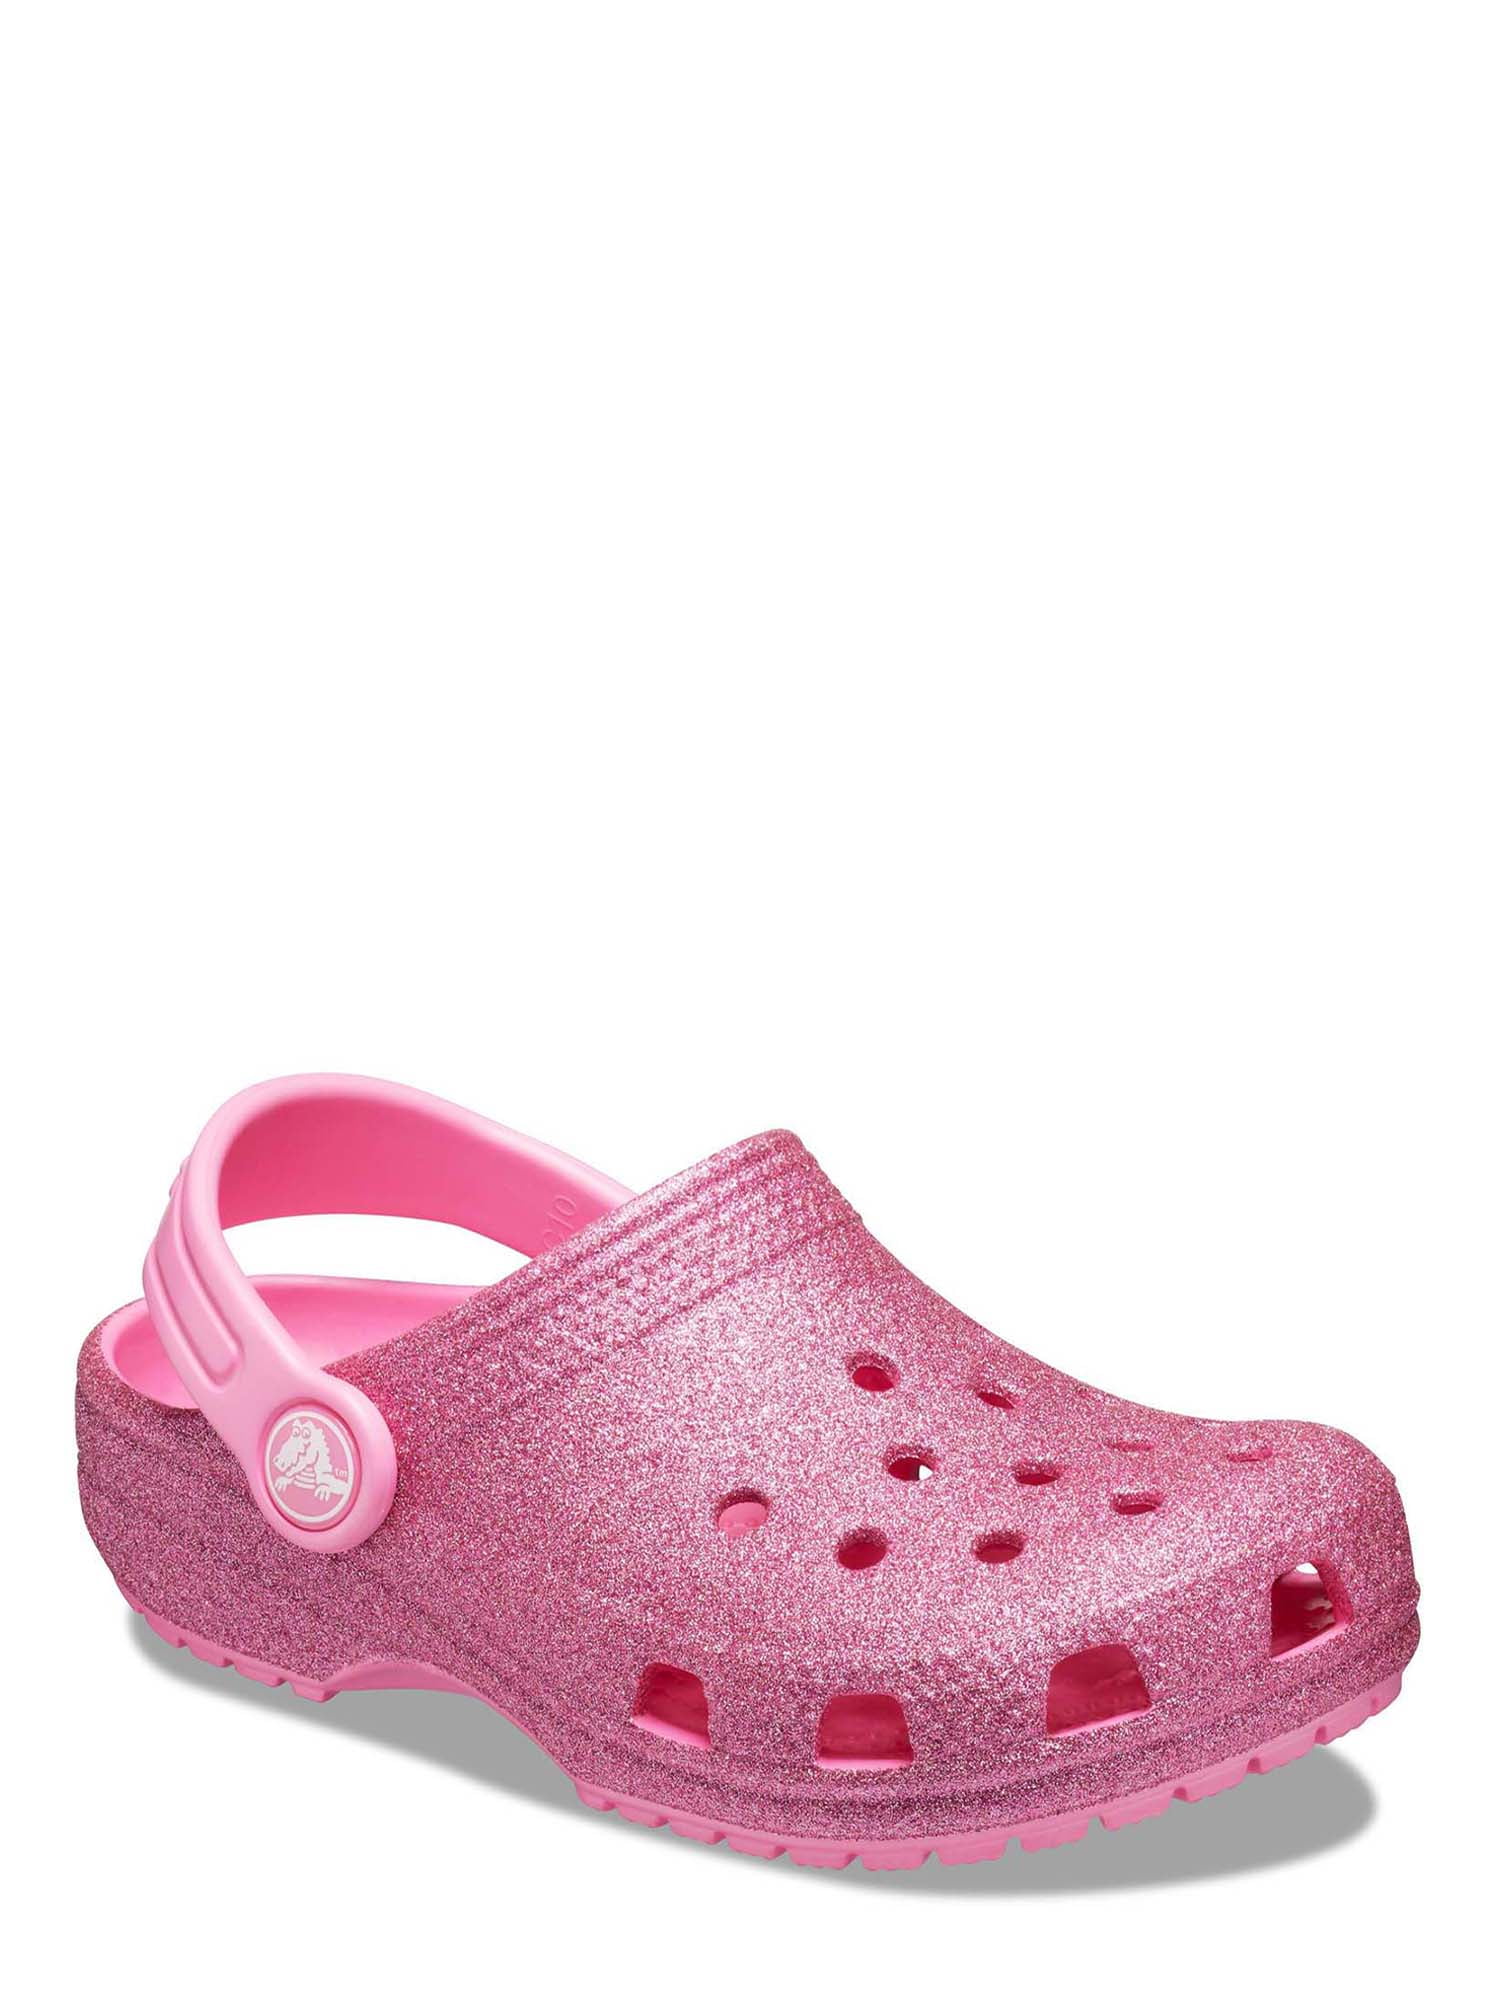 Crocs Toddler & Kids Classic Glitter Clog, Sizes 4-6 